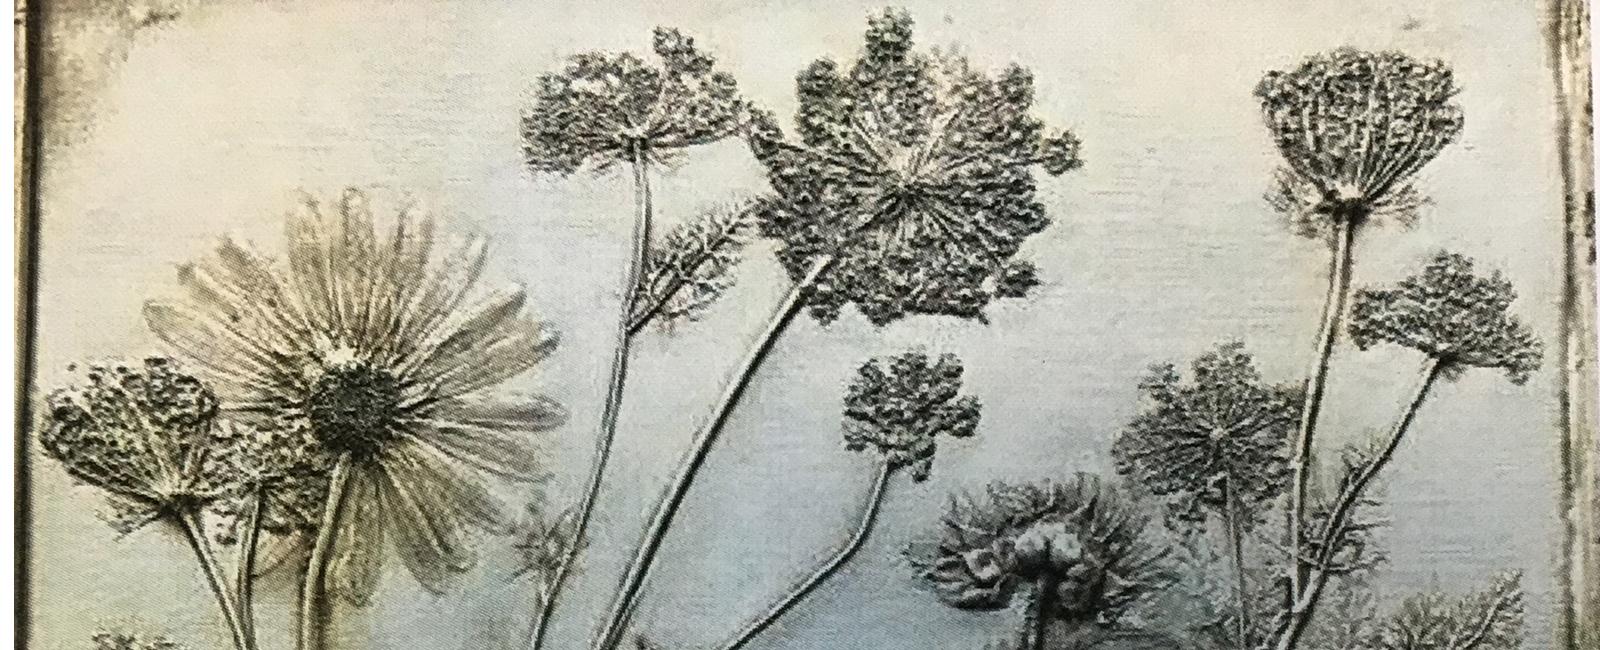 Sample of a botanical impression